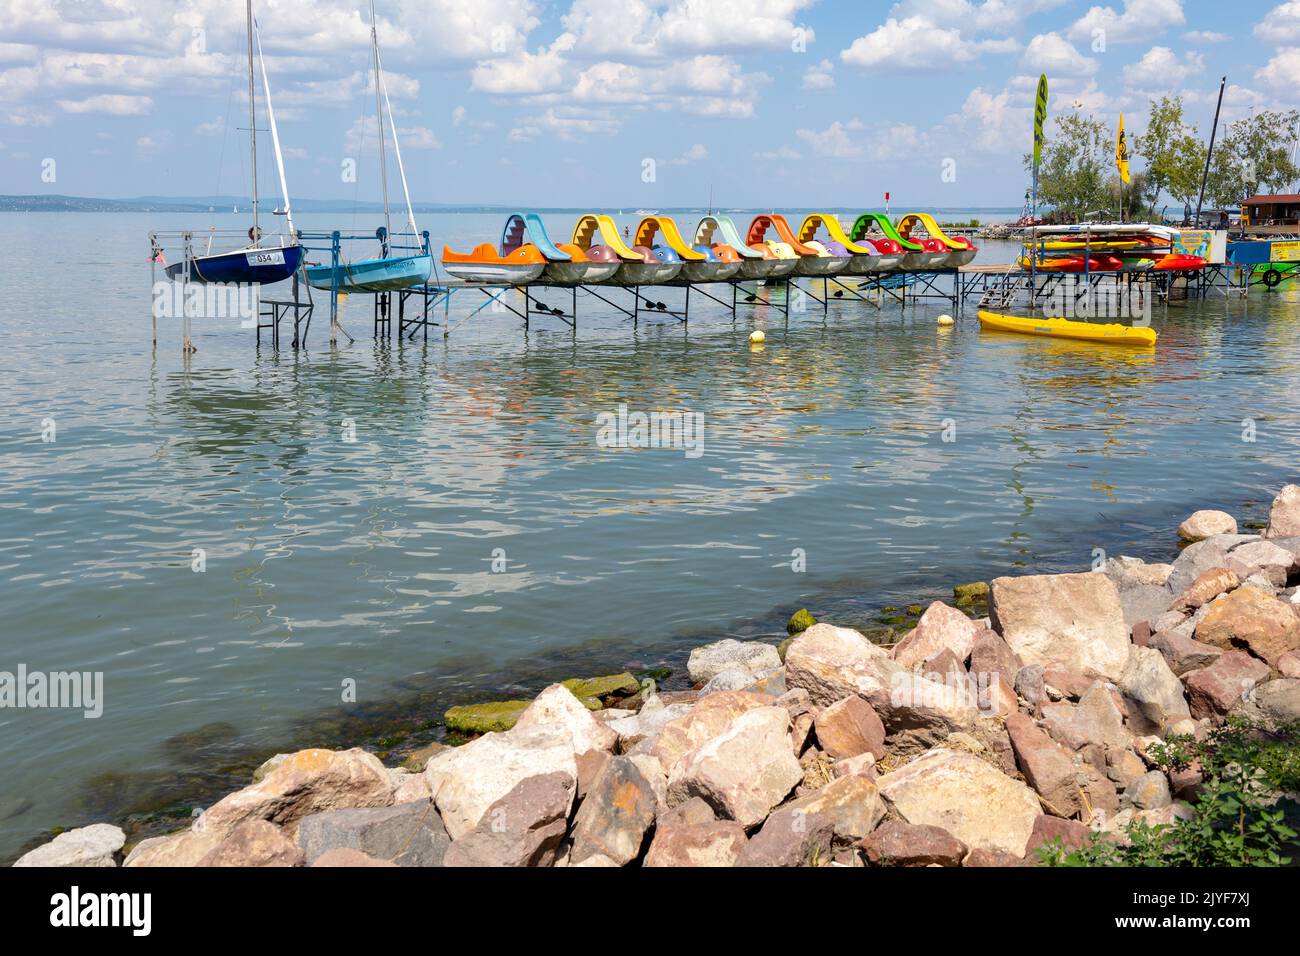 Siofok - rekreační oblast, Jezero Balaton, Maďarsko / Siofok town recreation area, Balaton lake, Hungary, Europe Stock Photo